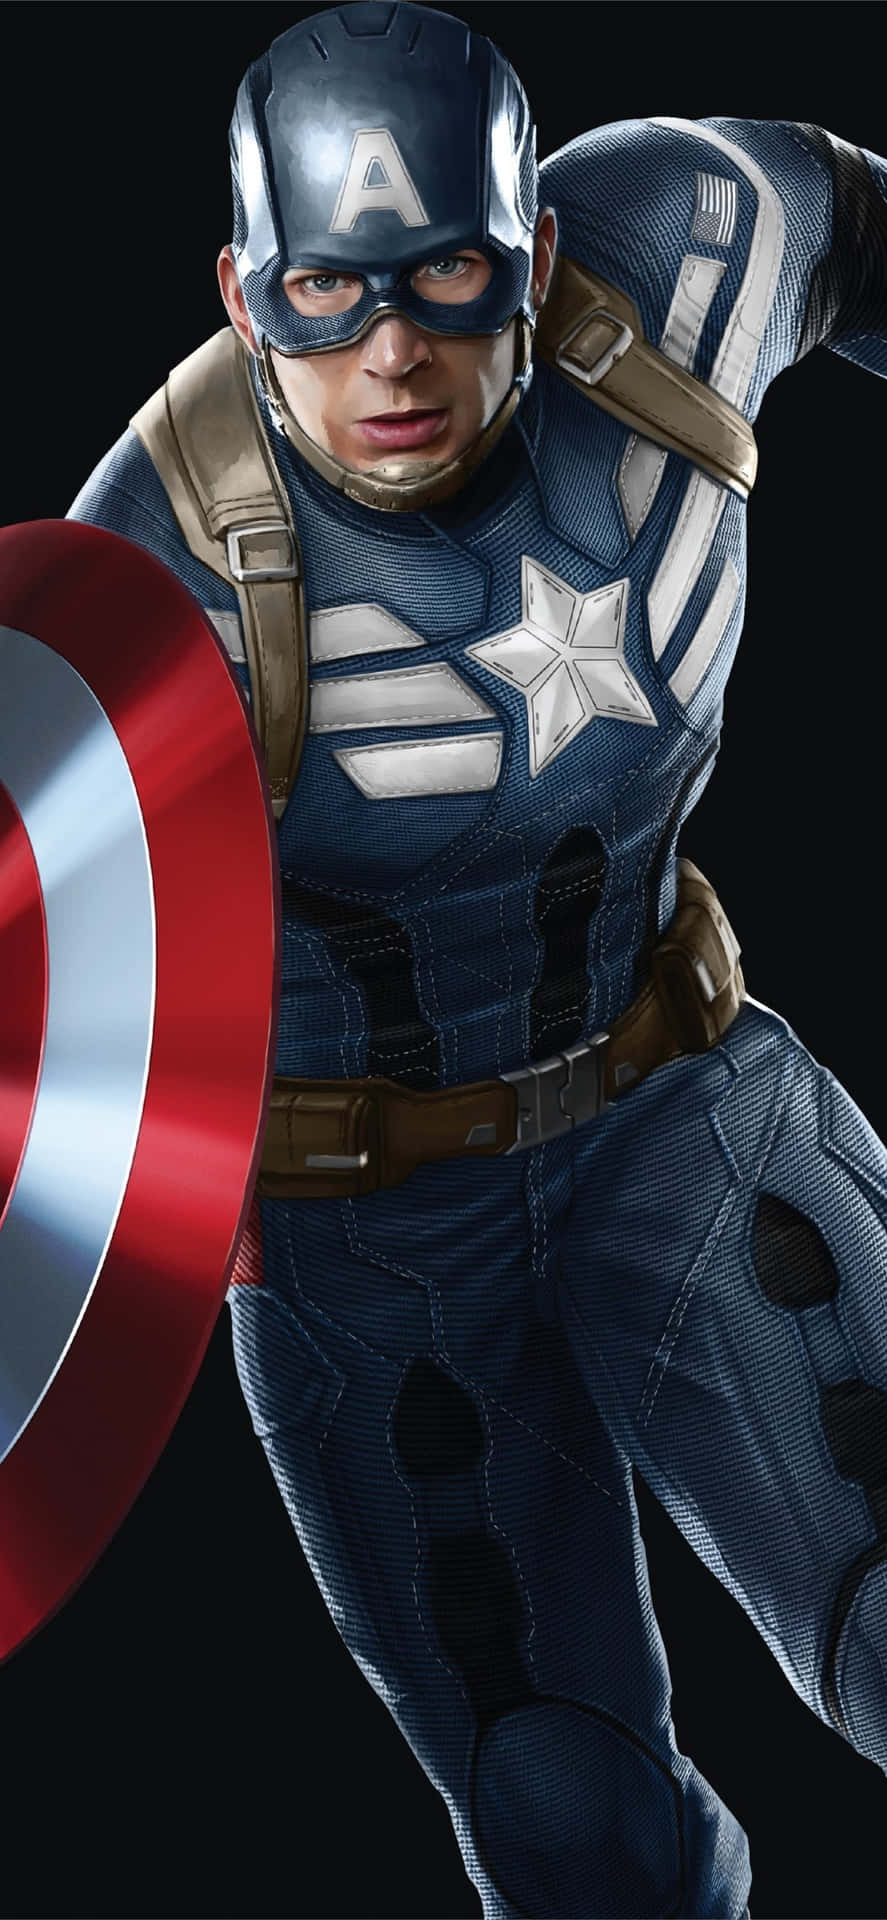 Captain Americain Action Wallpaper